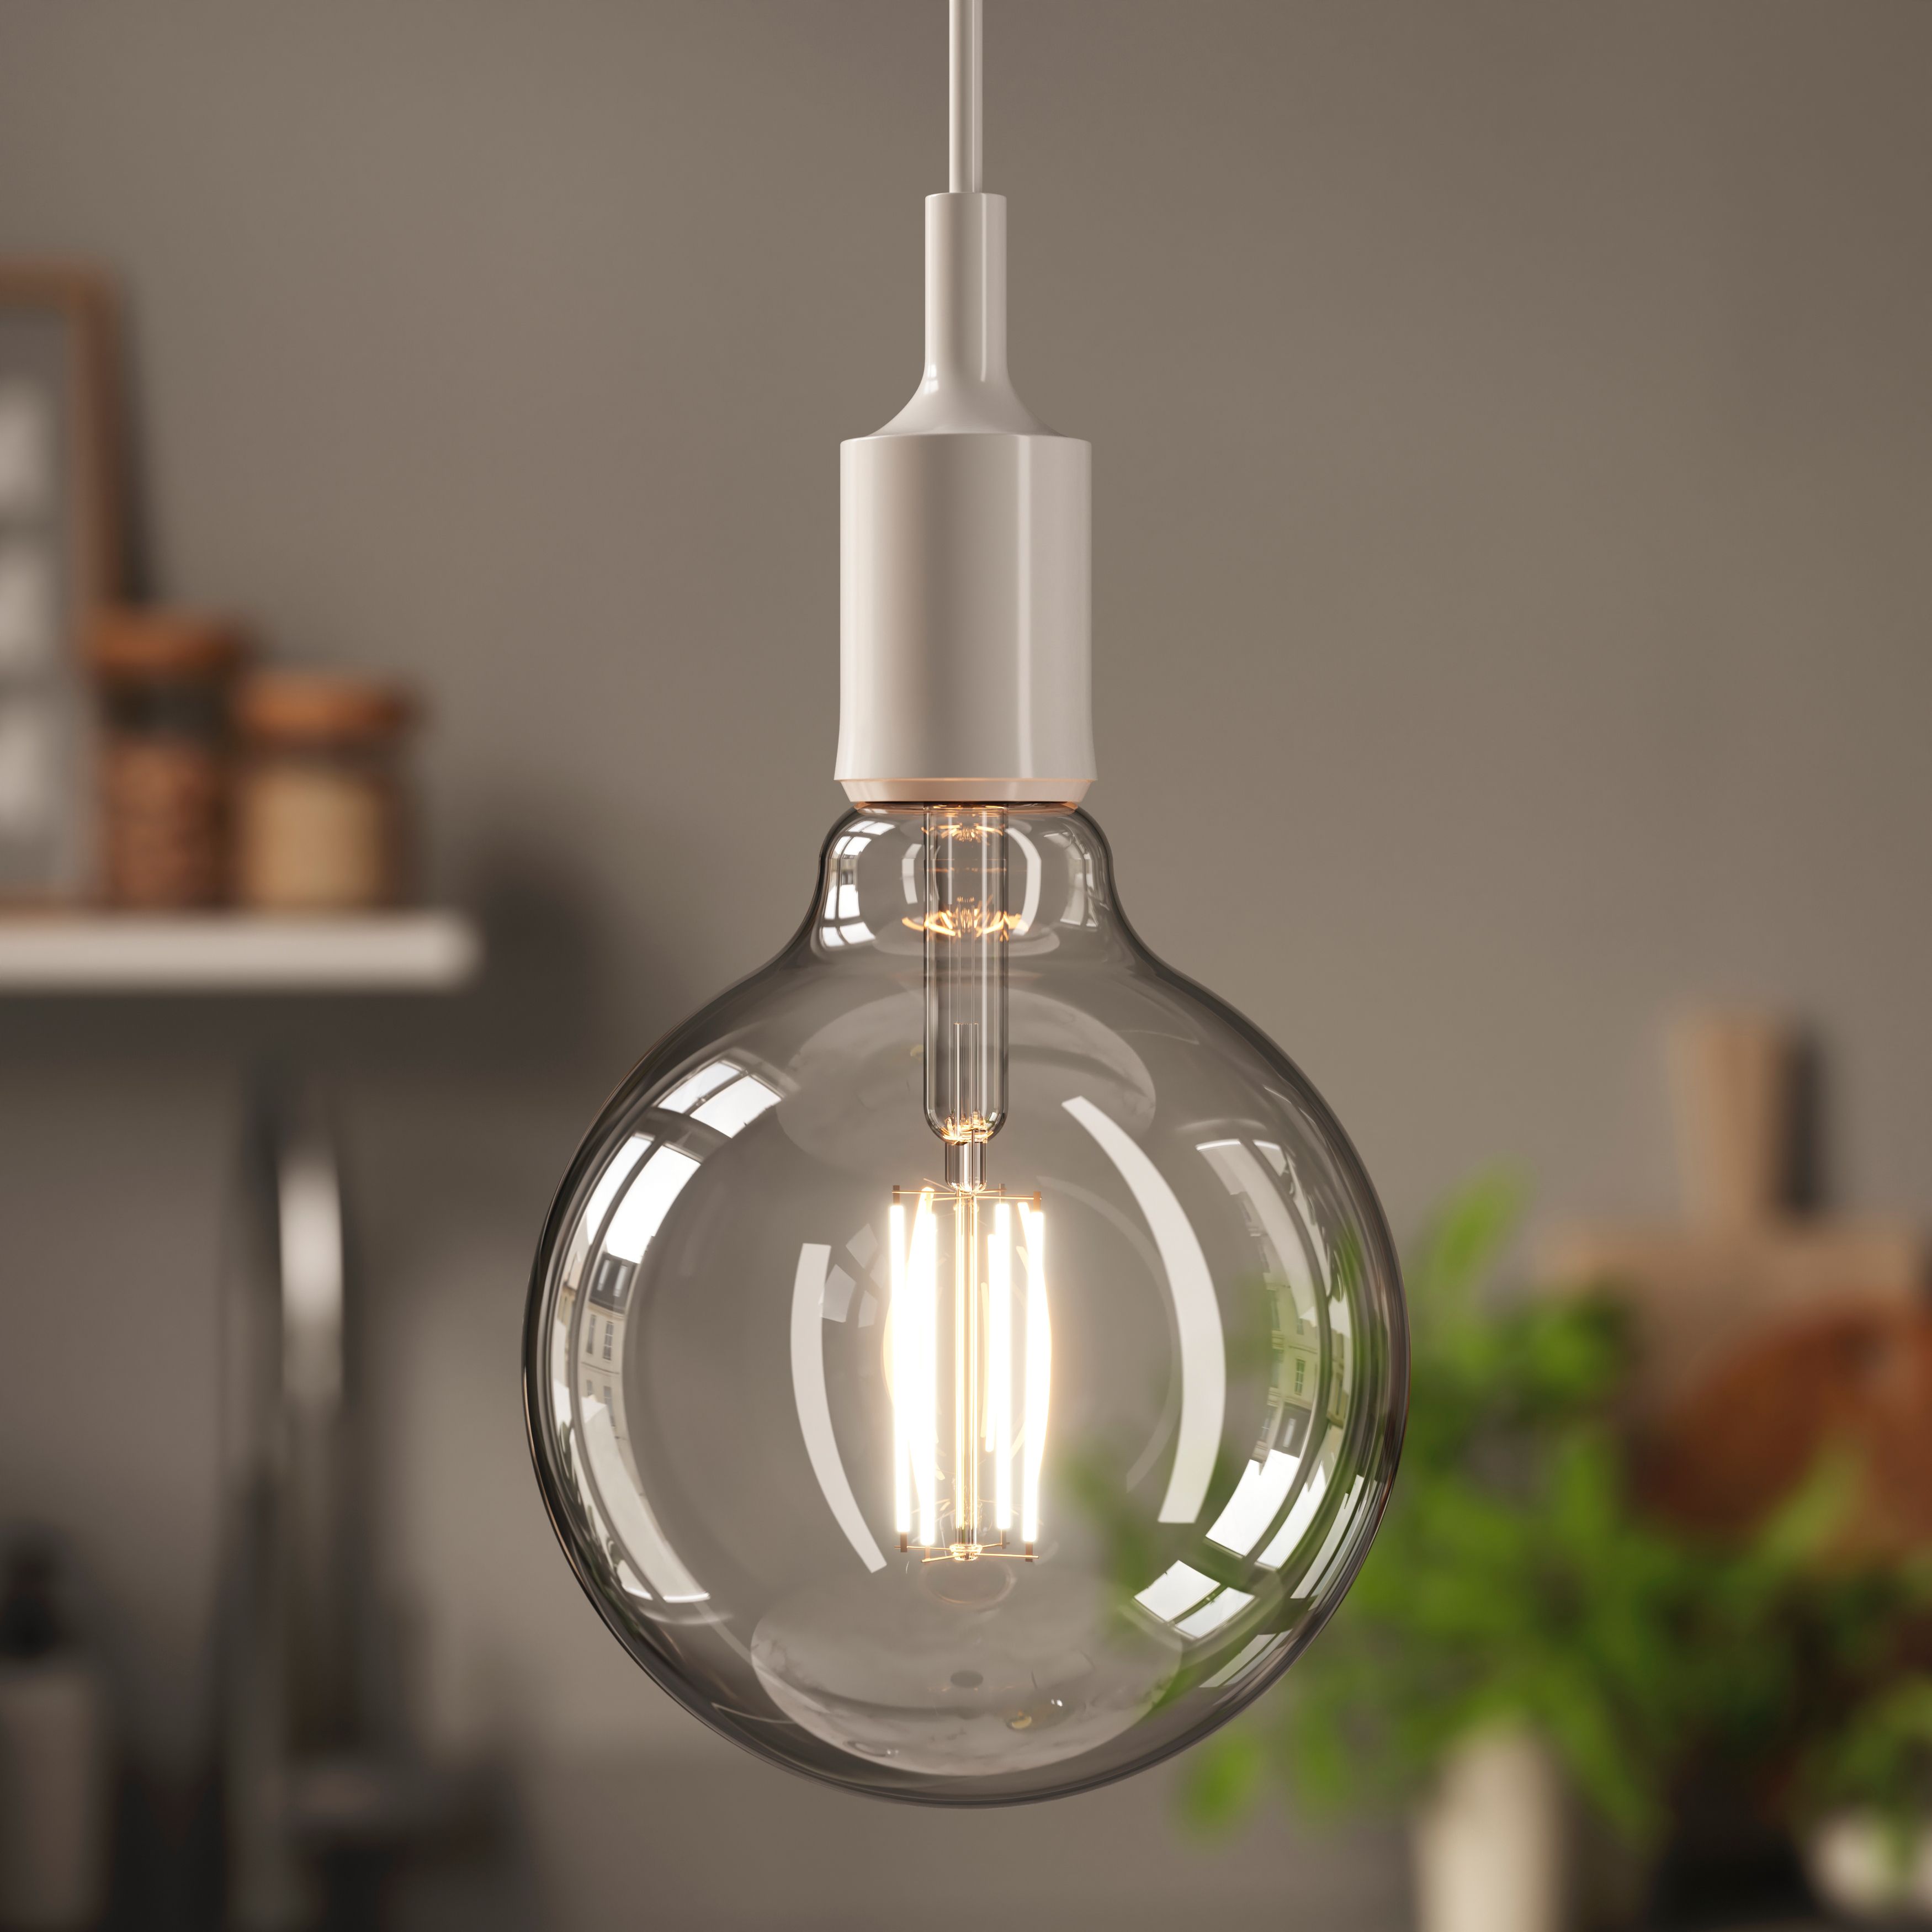 Diall G125 B22 3.4W 470lm Clear Globe Warm white LED Filament Light bulb